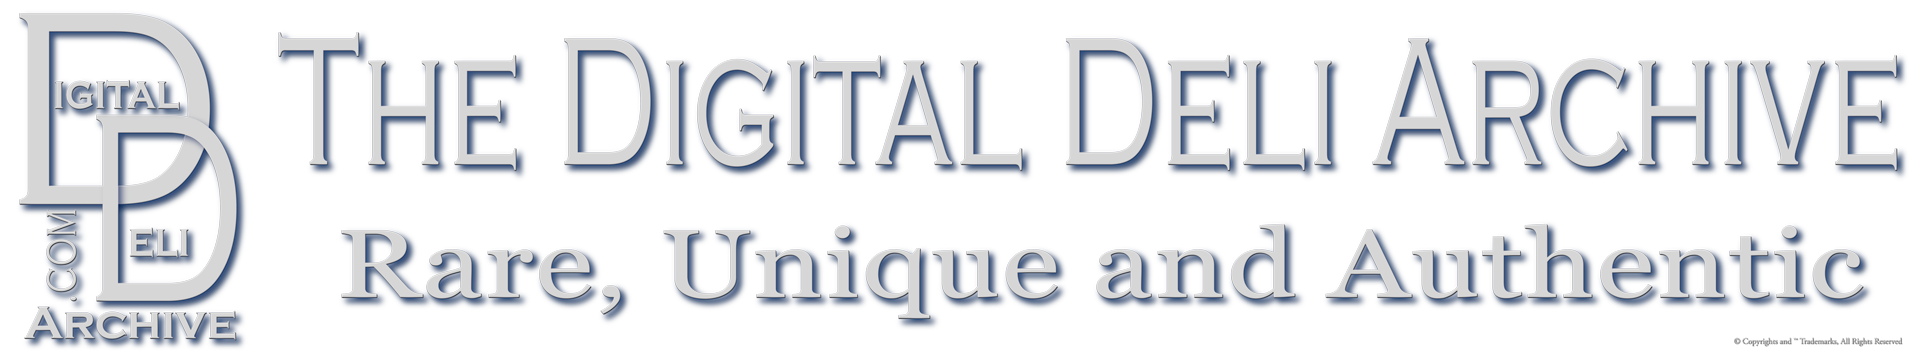 DigitalDeliArchive.com Properties & Brands Imprint, Rare, Unique and Authentic